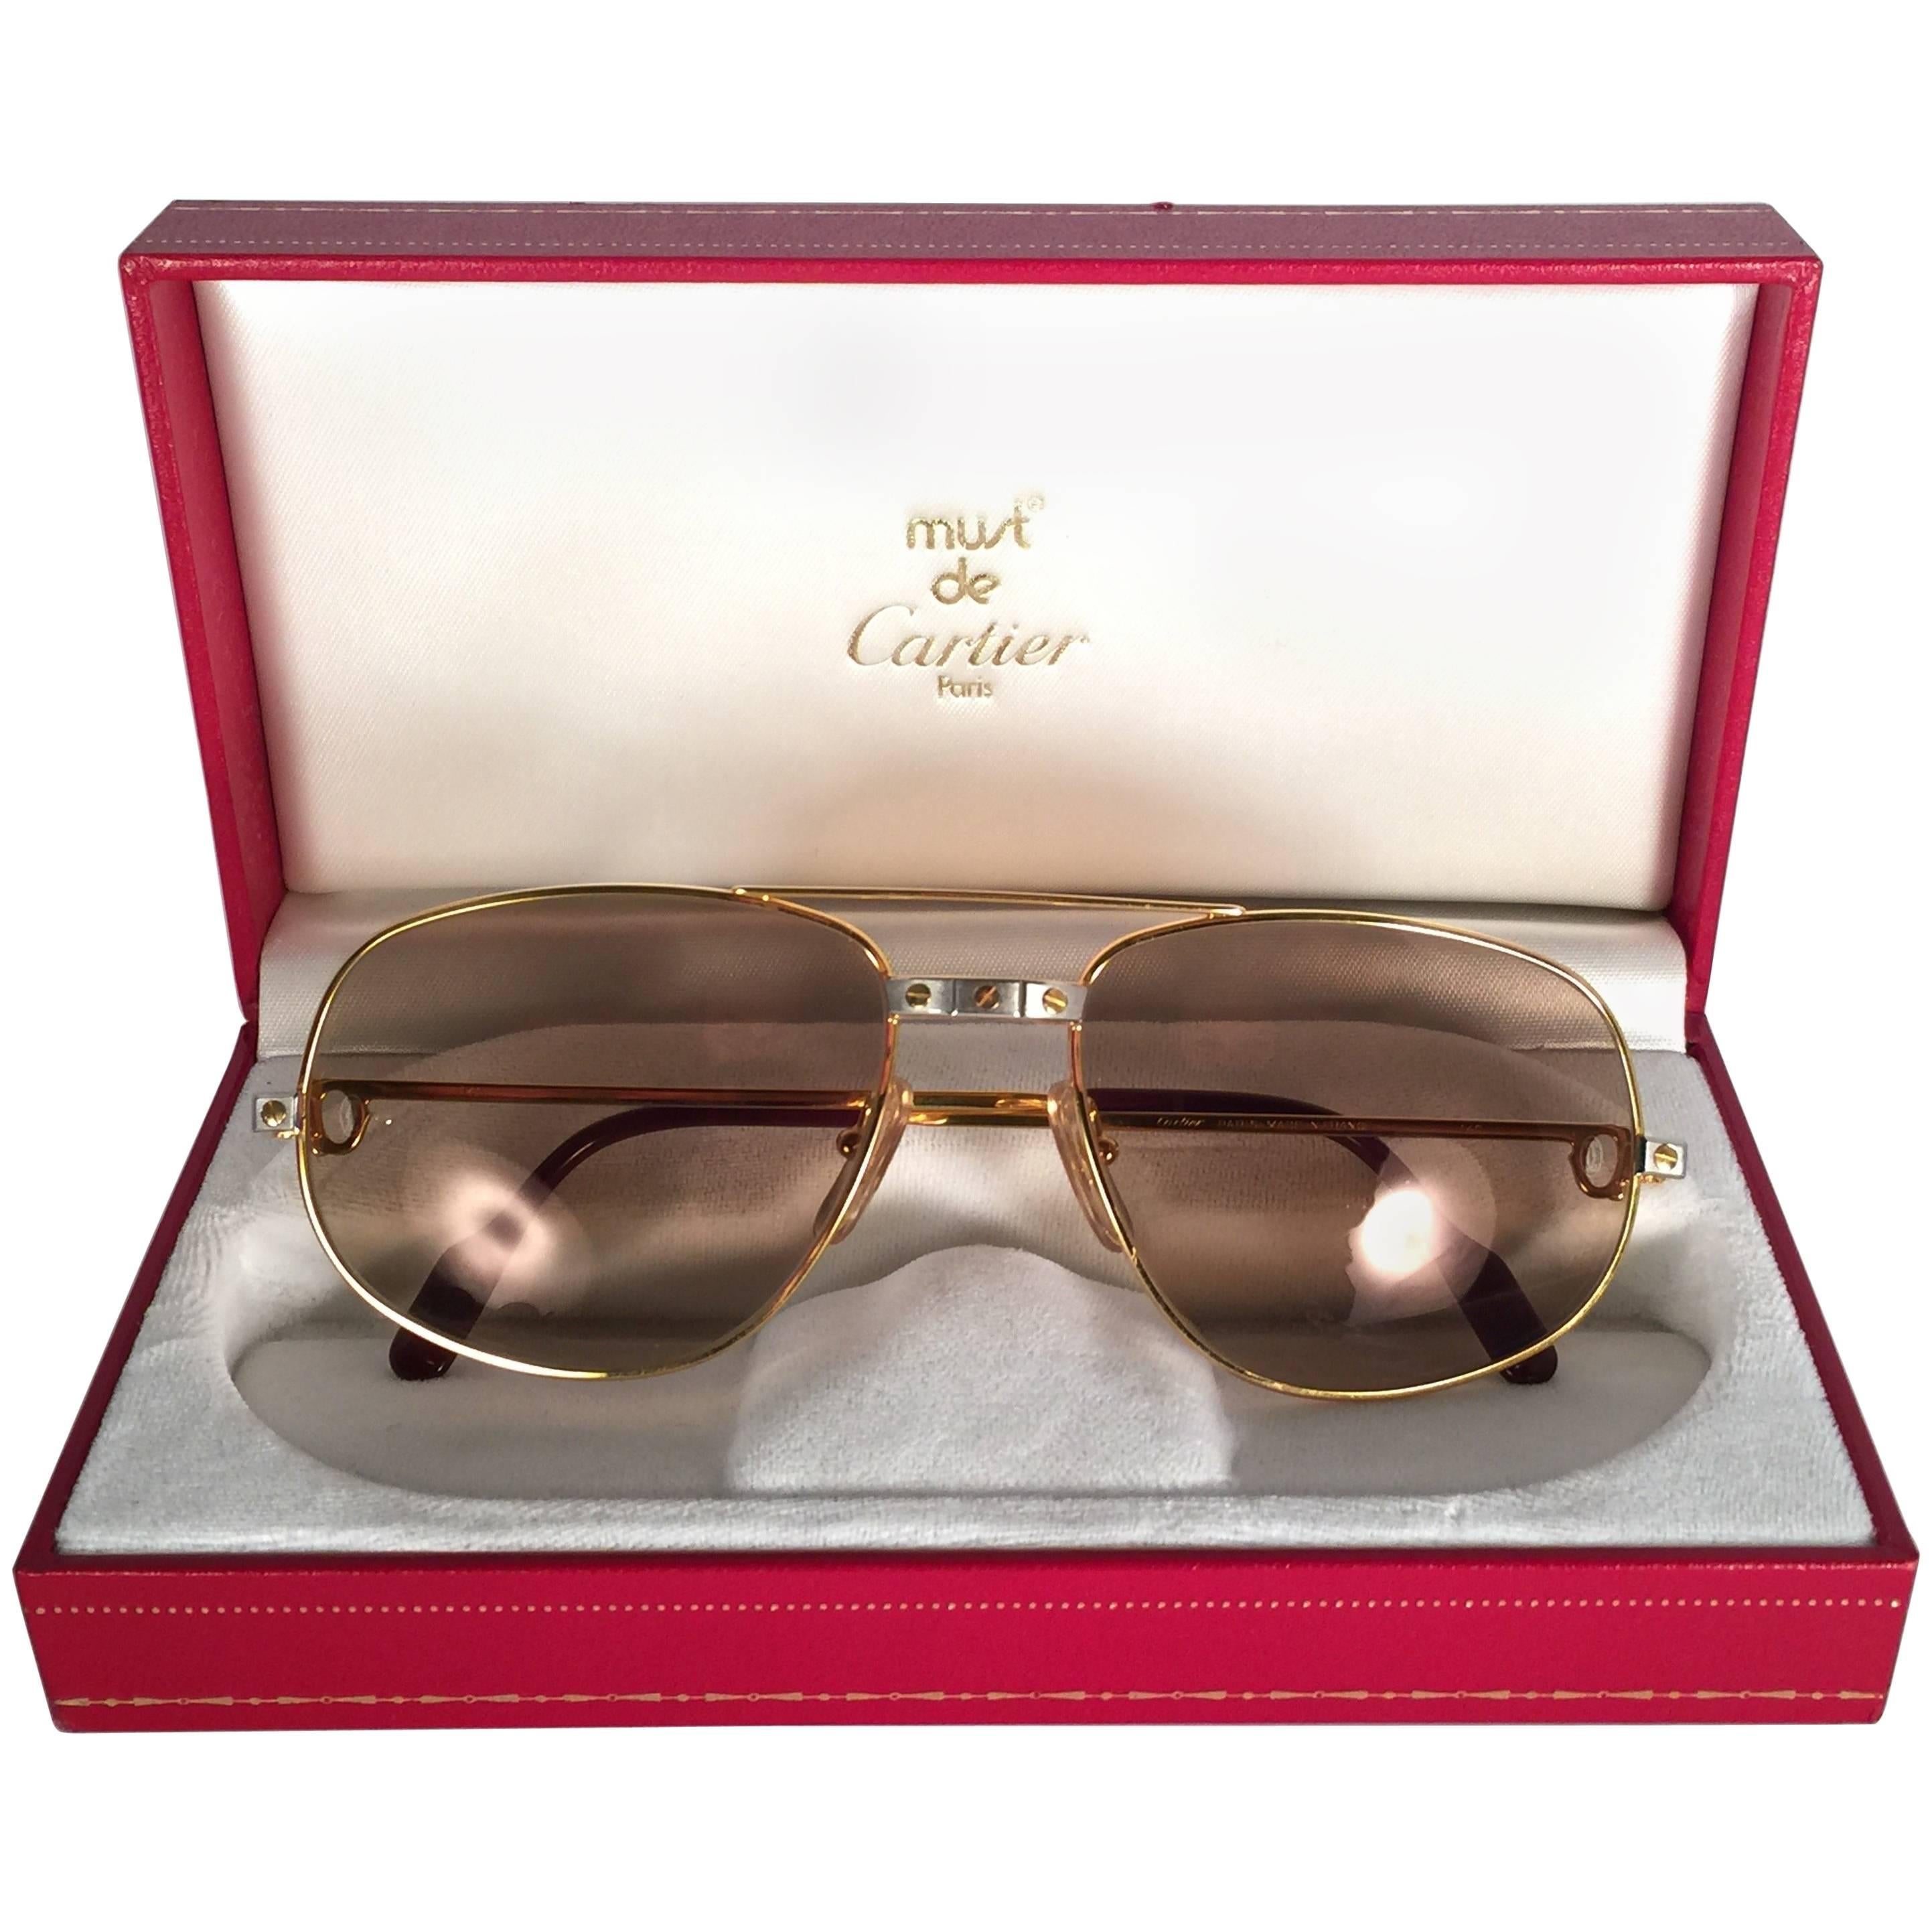 NOS Collectible Cartier CARTIER Romance Vintage Sunglasses 